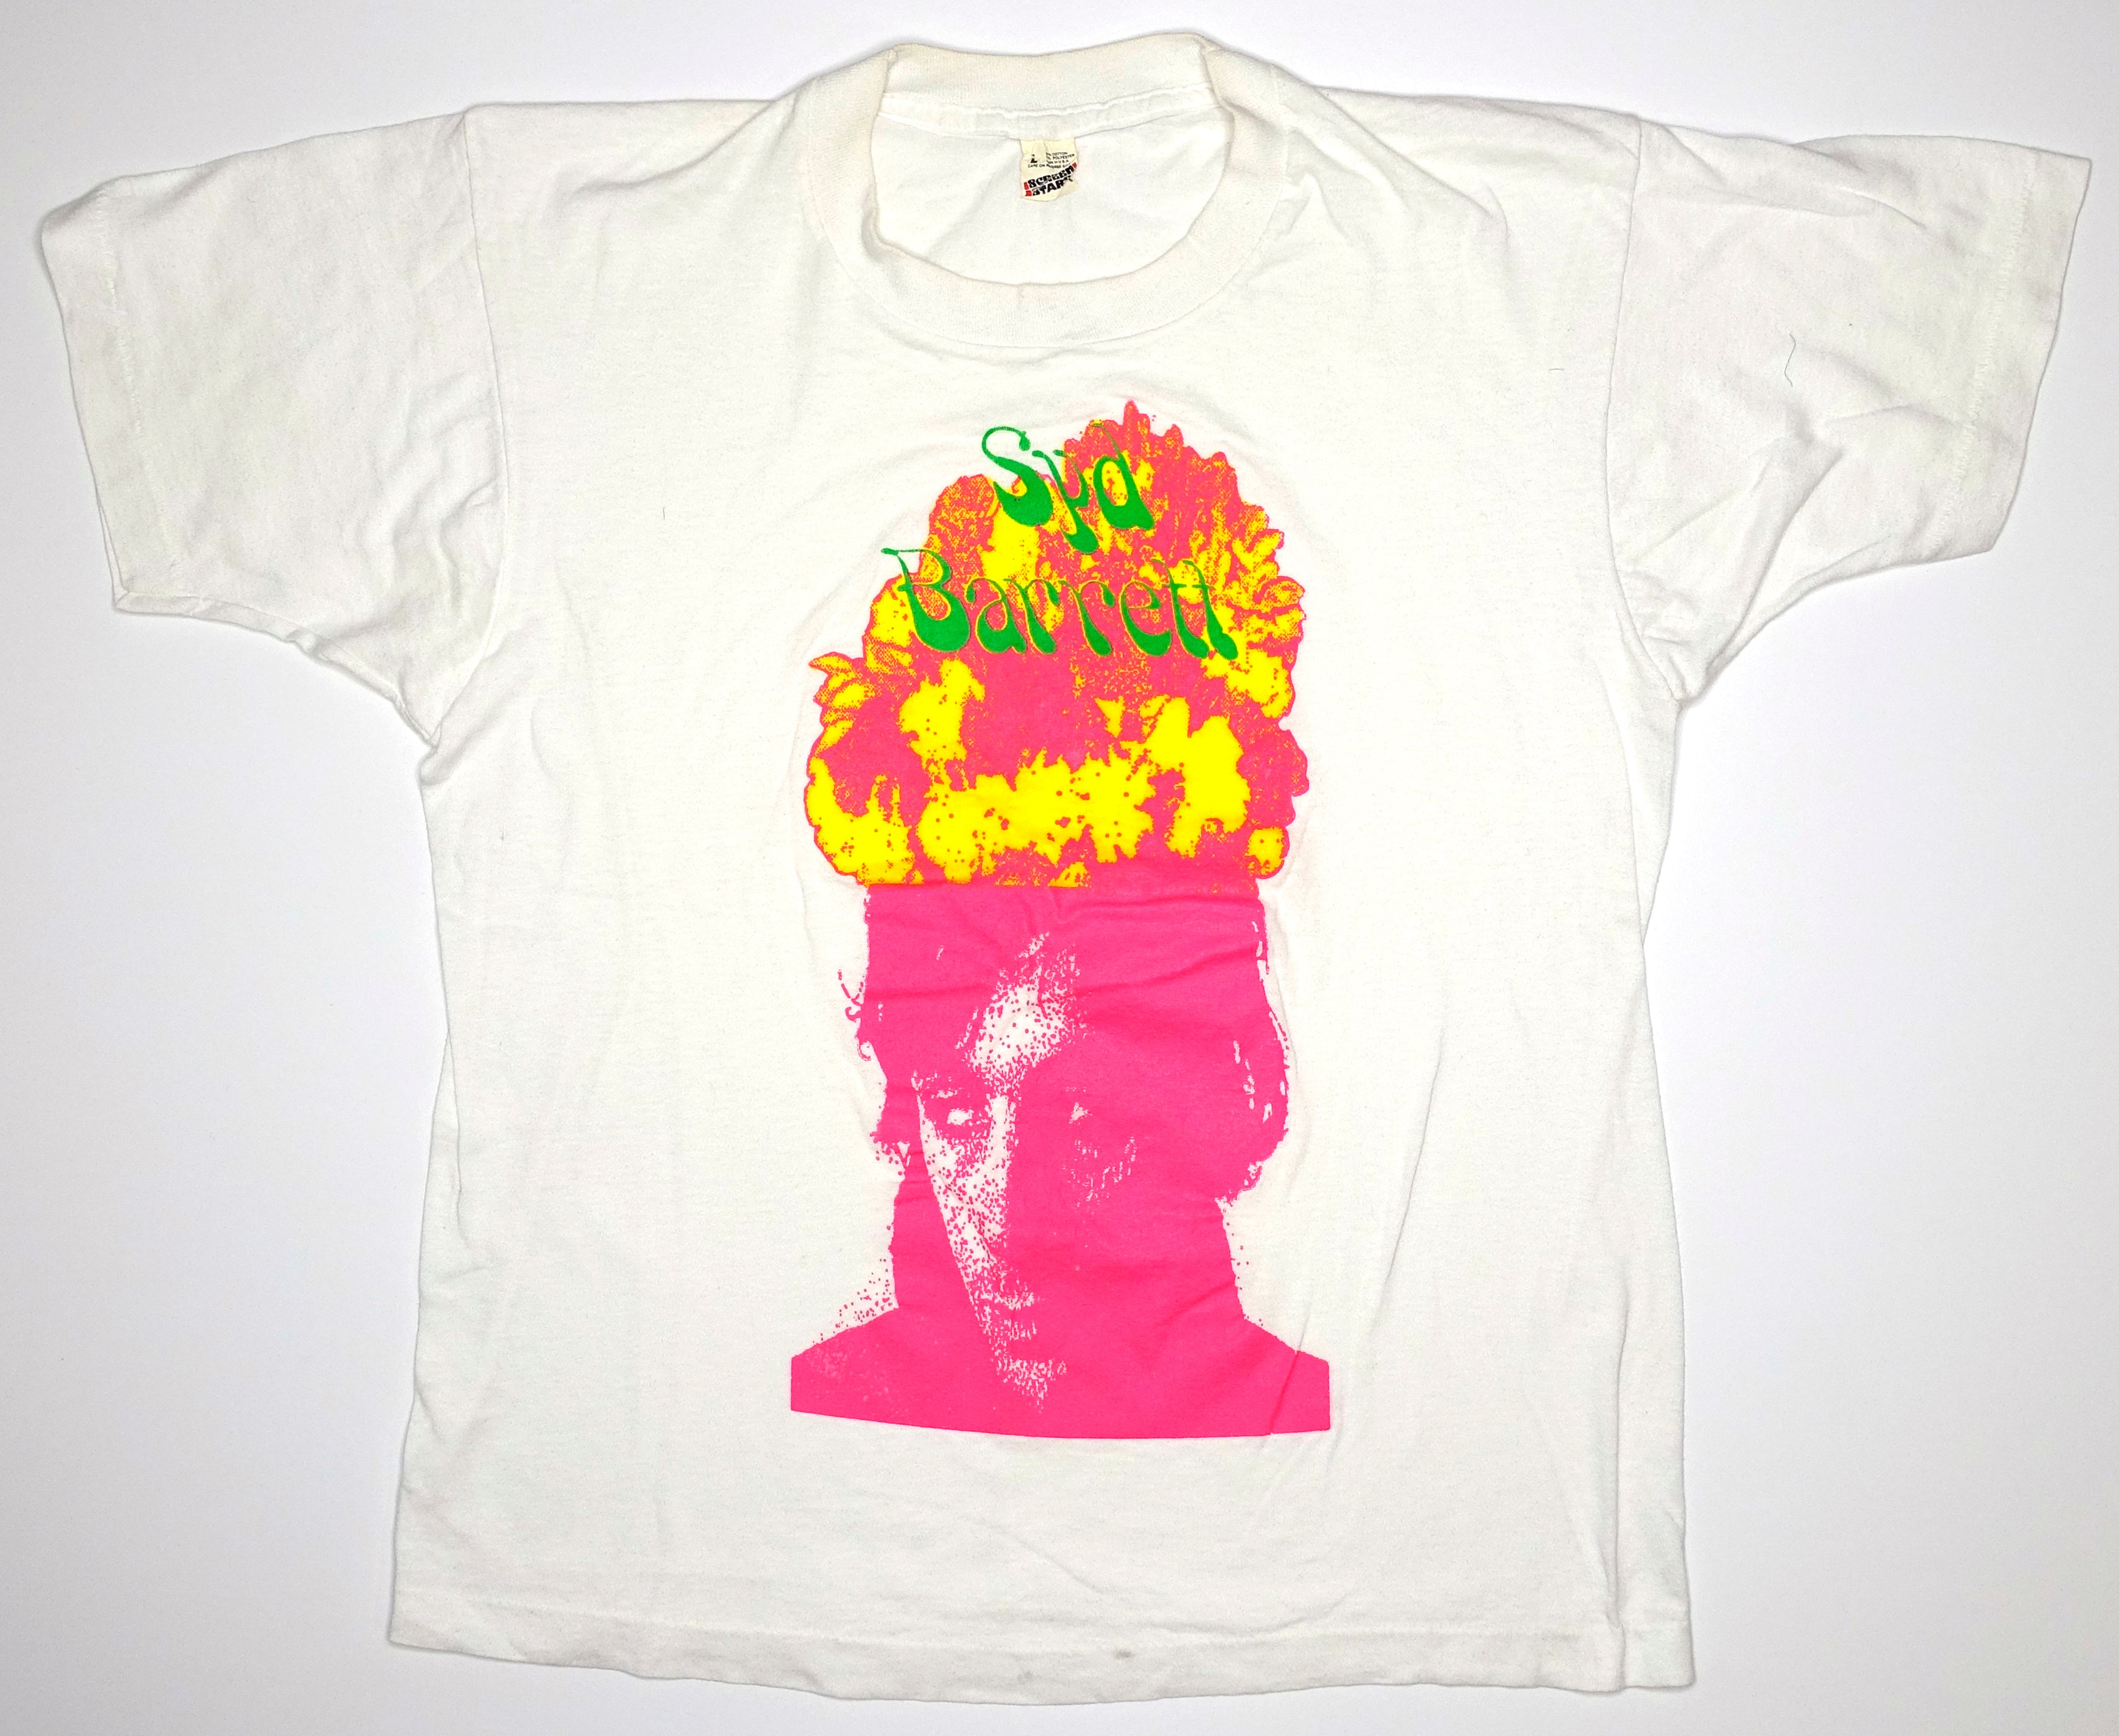 Syd Barrett - Concert Shirt Size Small